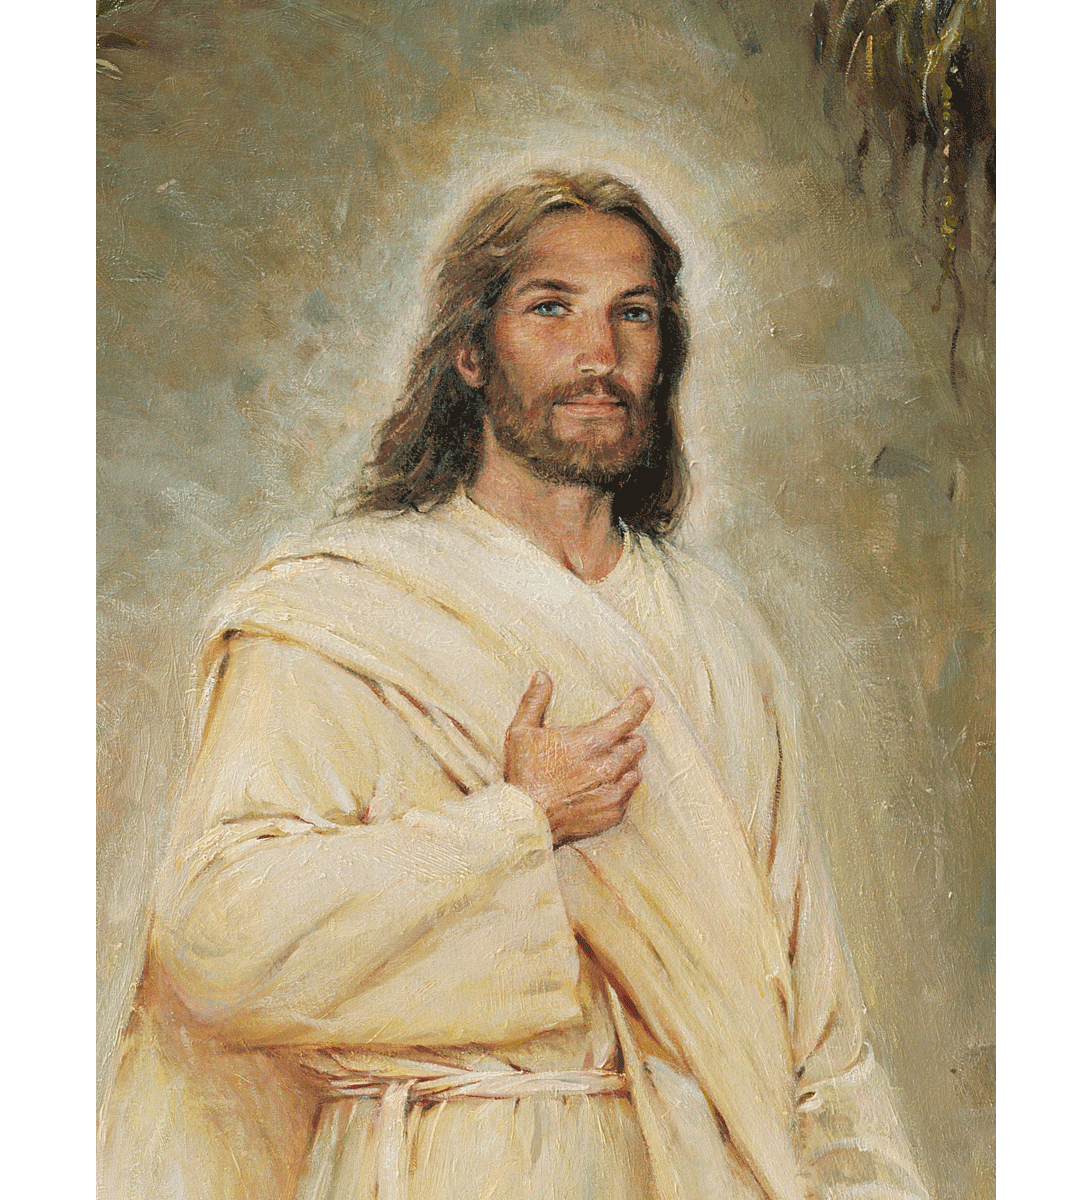 The Resurrected Christ (Detail)